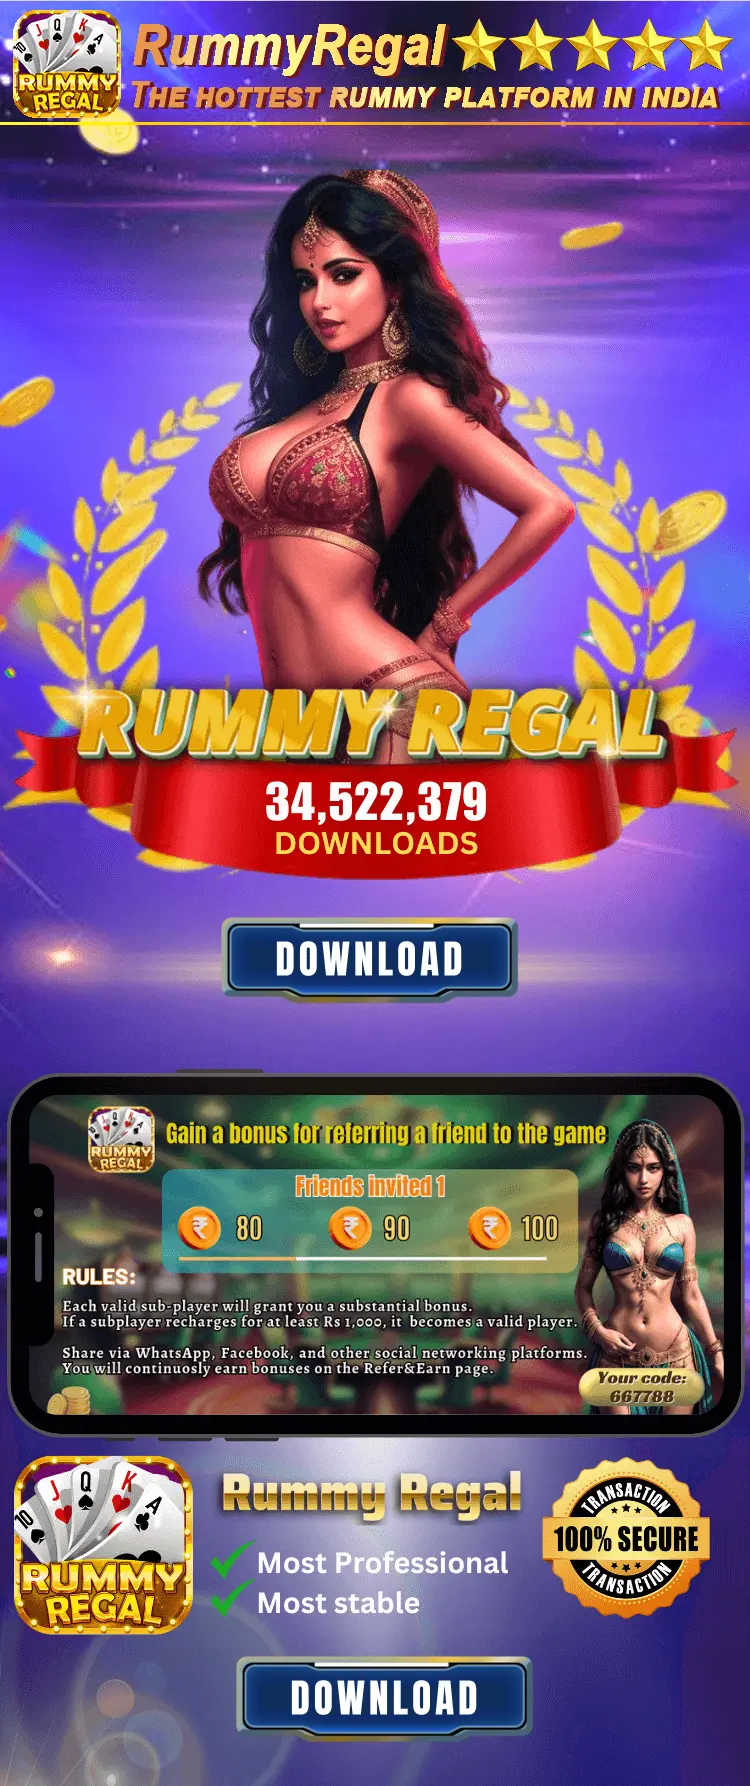 Rummy Regal App, Top 10 Rummy App